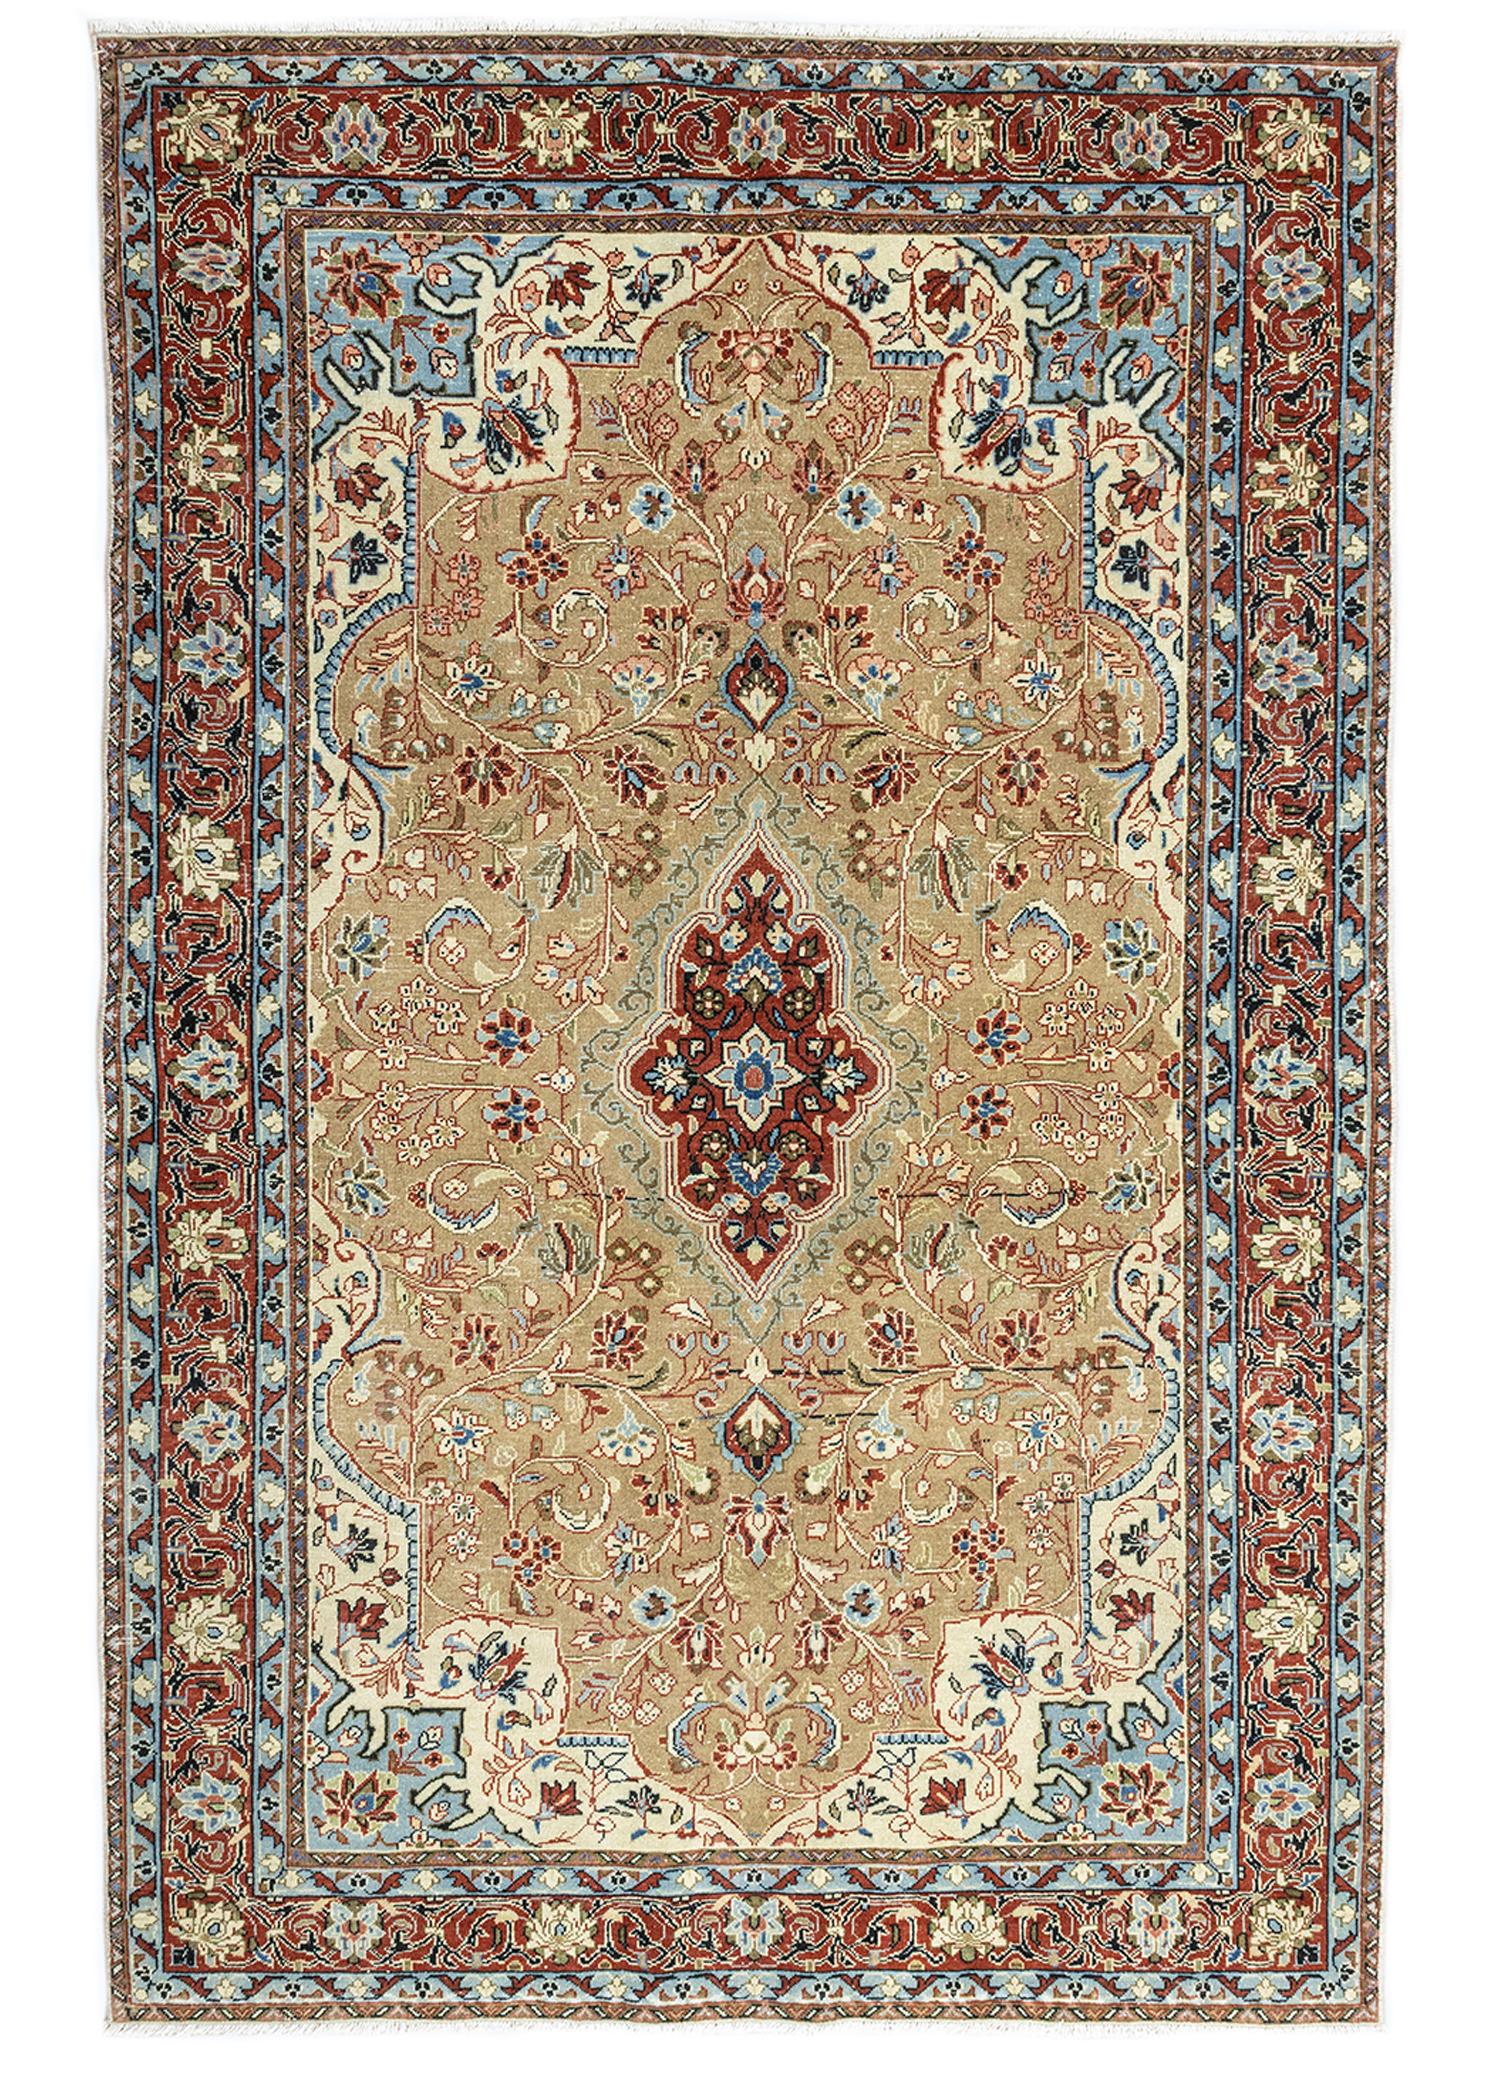 Pakdest Ethnic Floral Patterned Hand-Woven Persian Carpet 131x201 cm